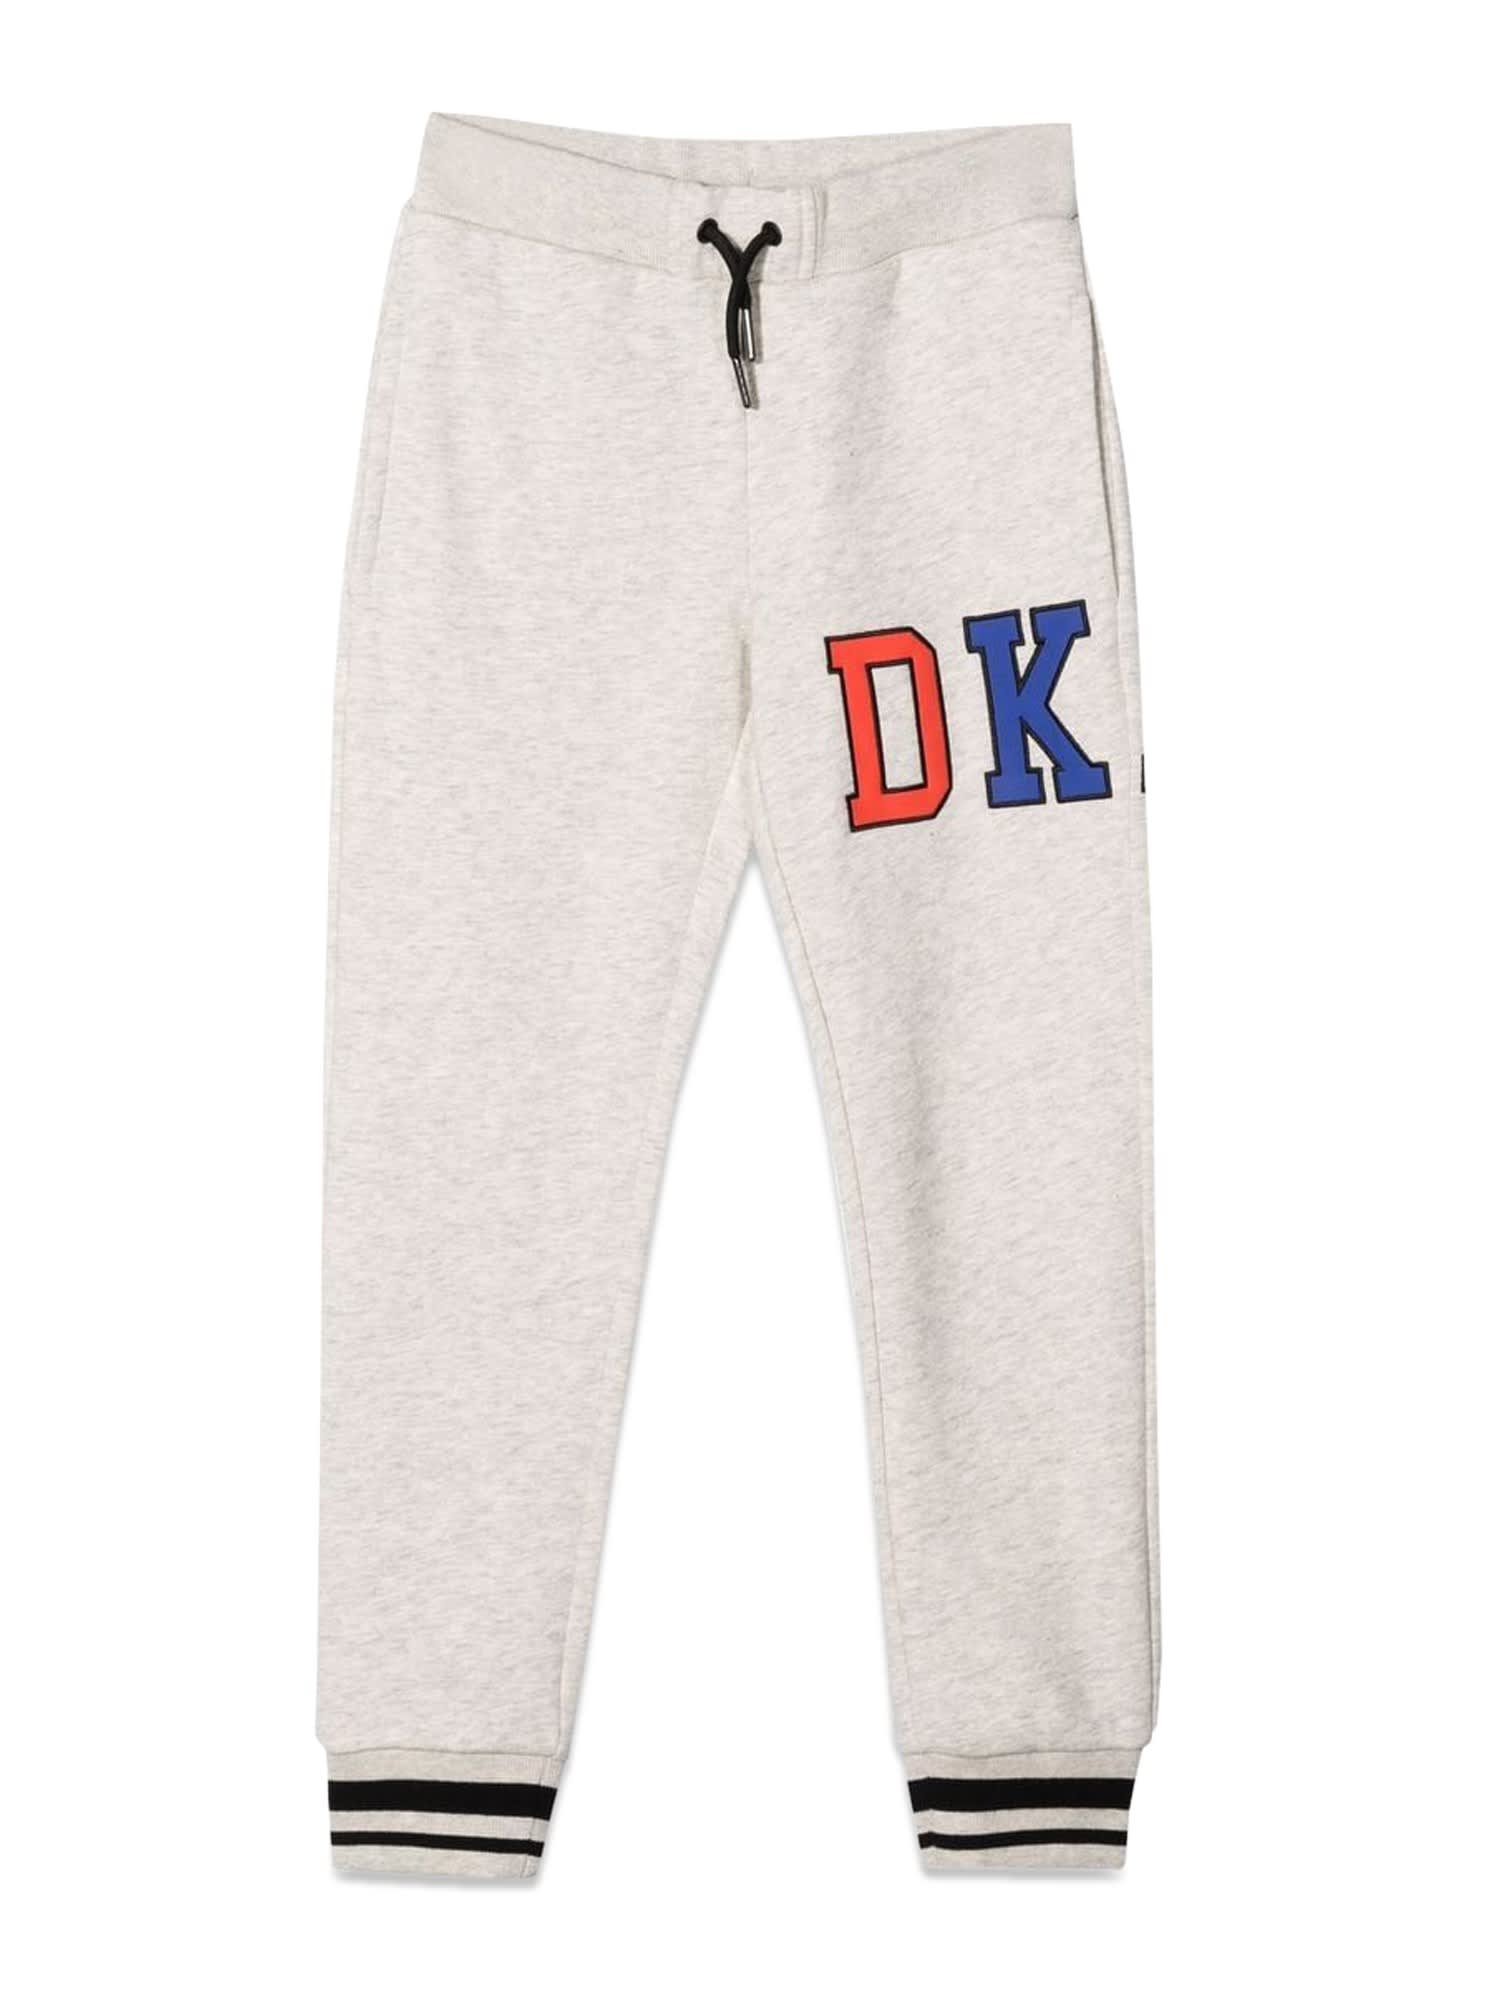 DKNY Jogging Pants